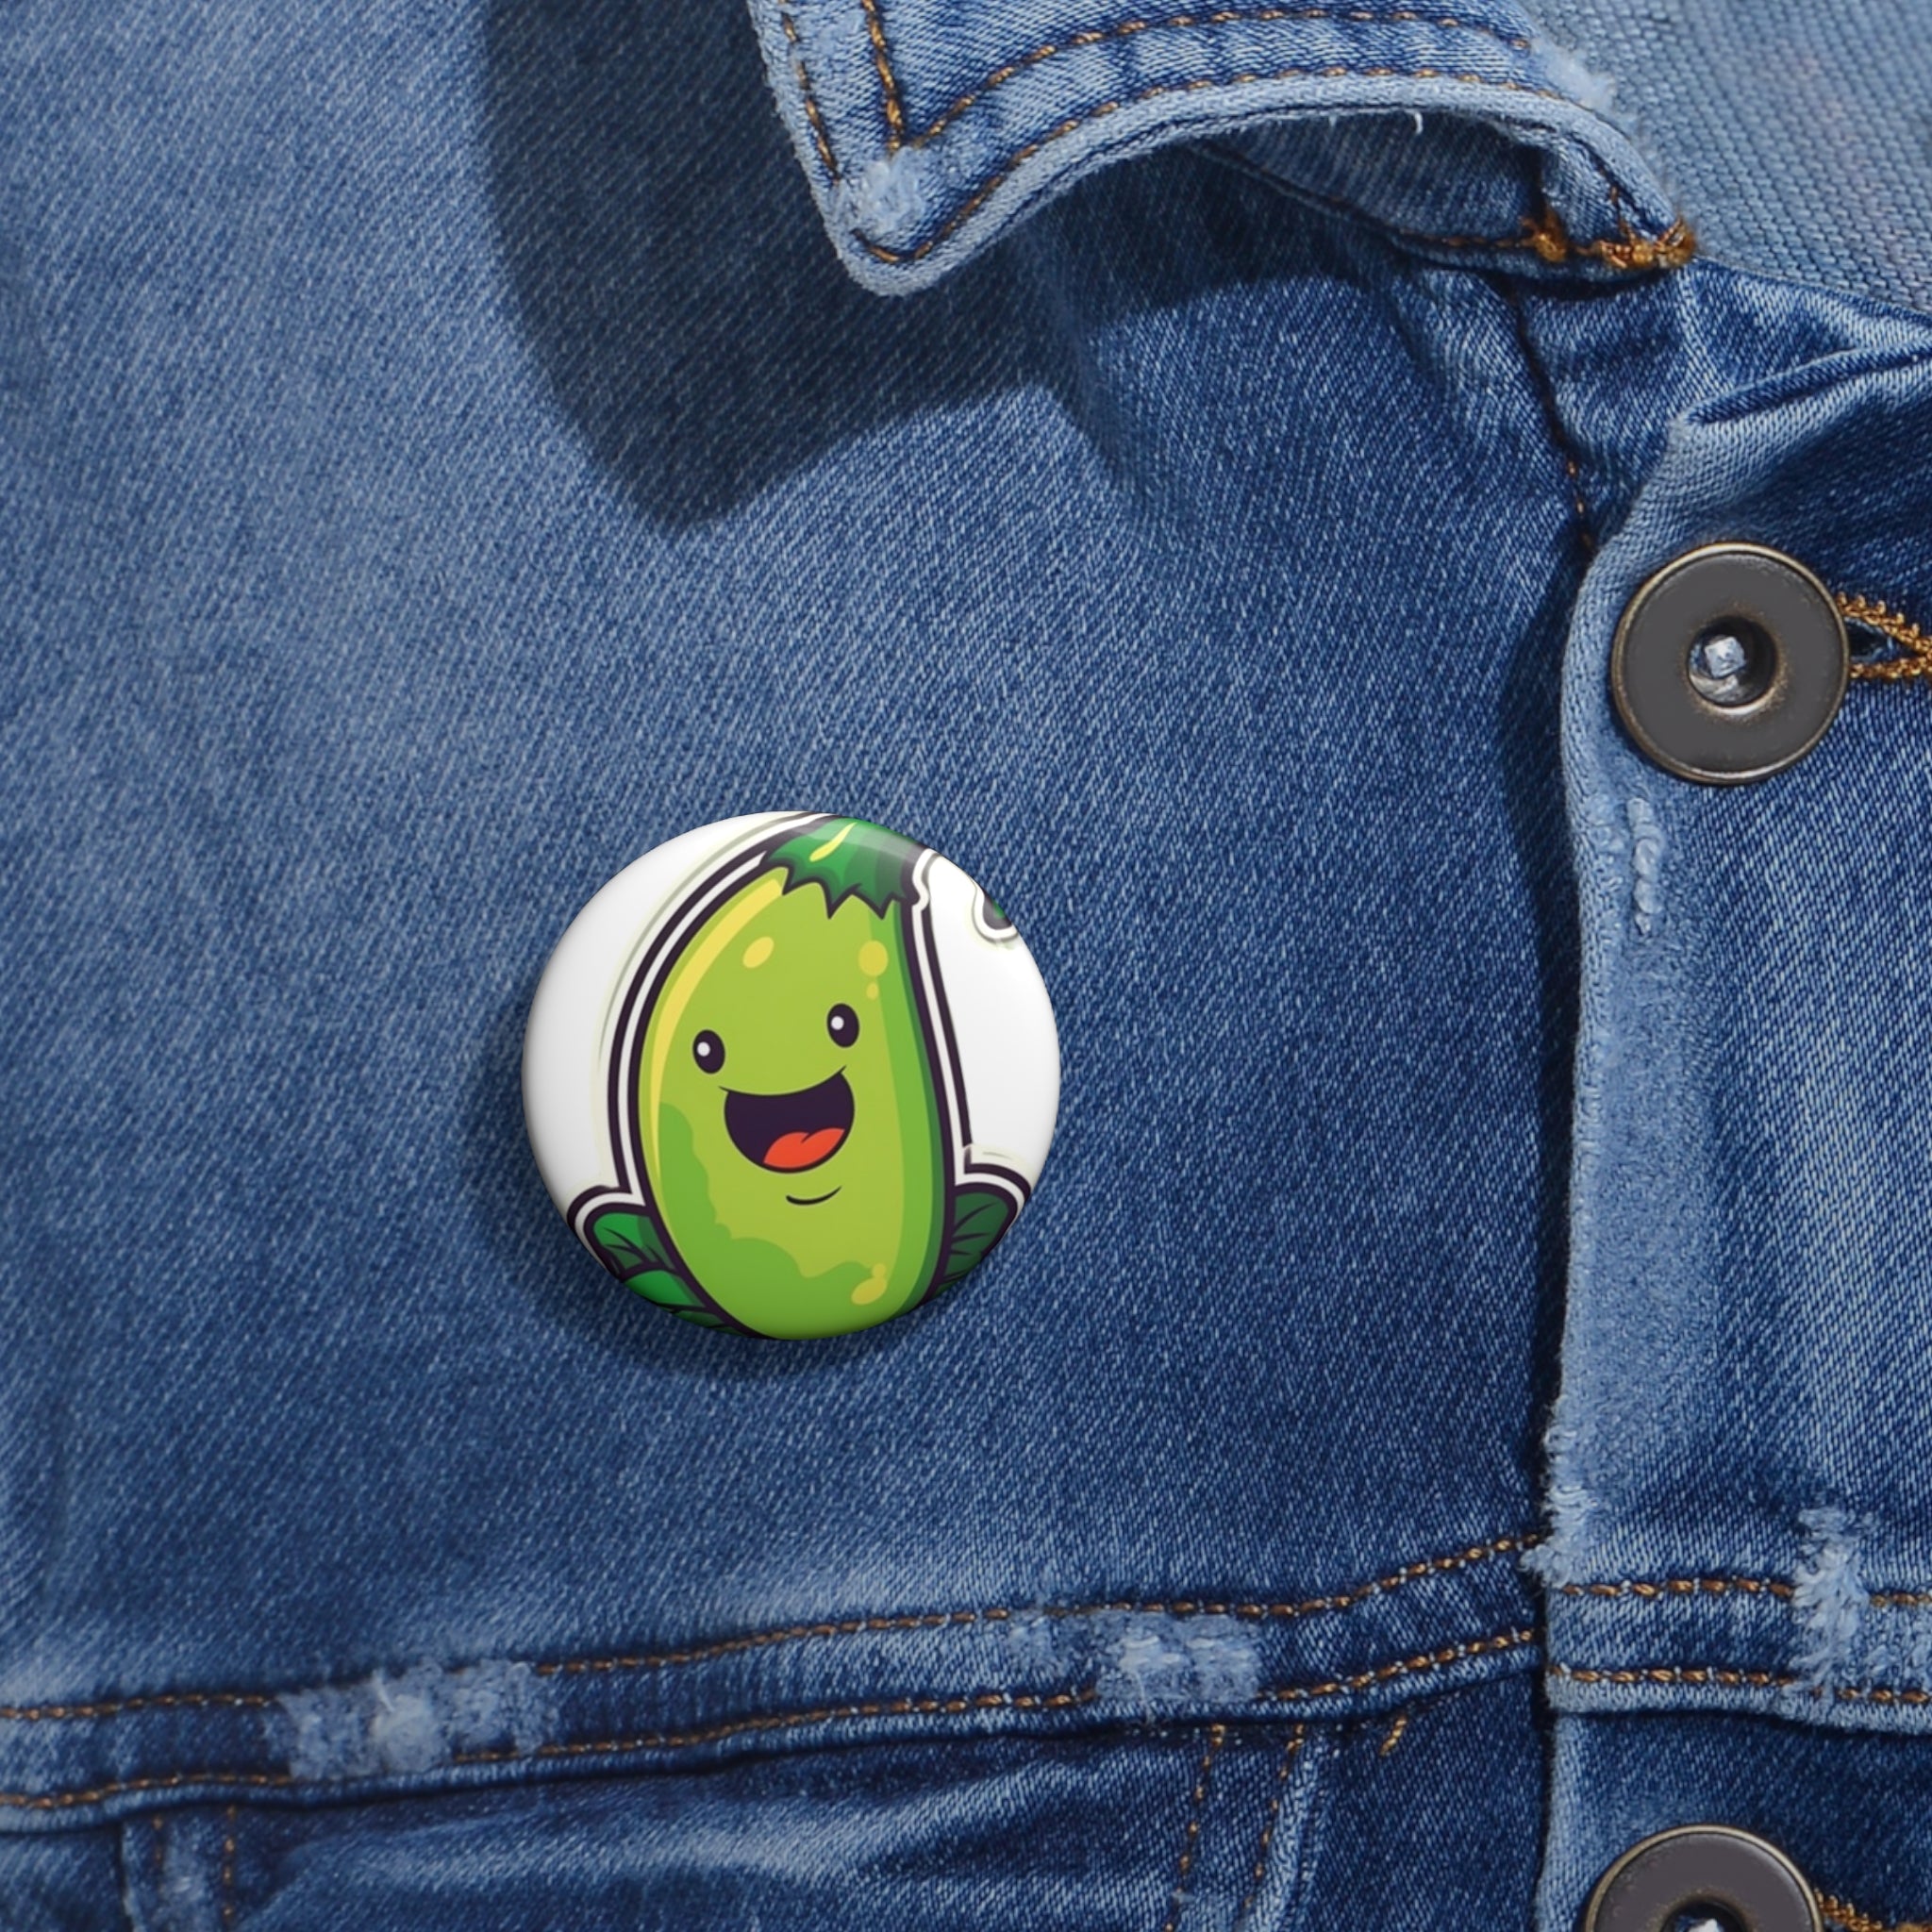 Custom Pin Buttons - Green Chili